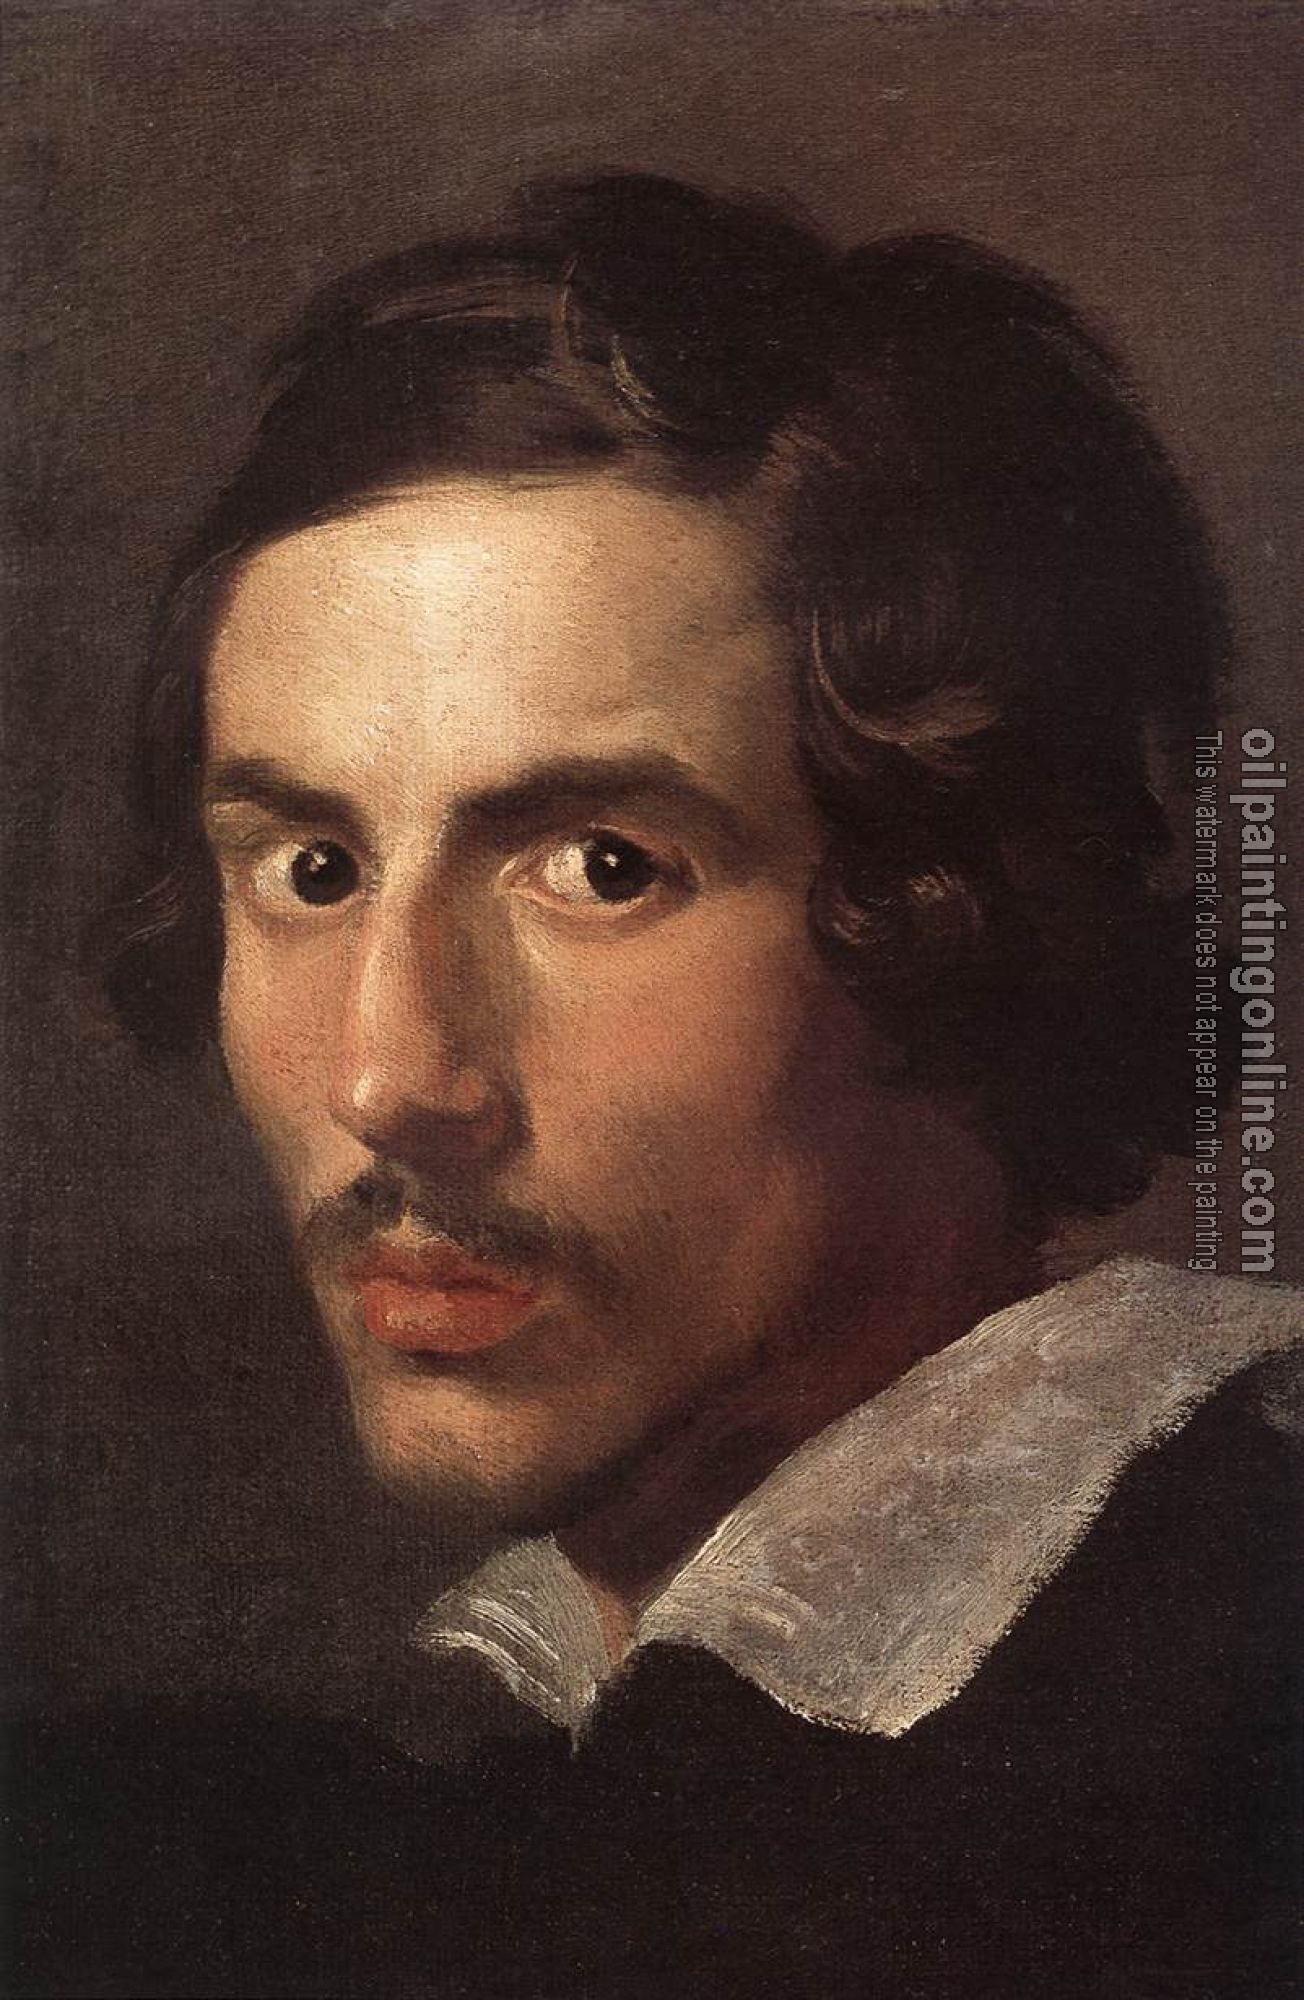 Bernini, Gian Lorenzo - Self-Portrait as a Young Man